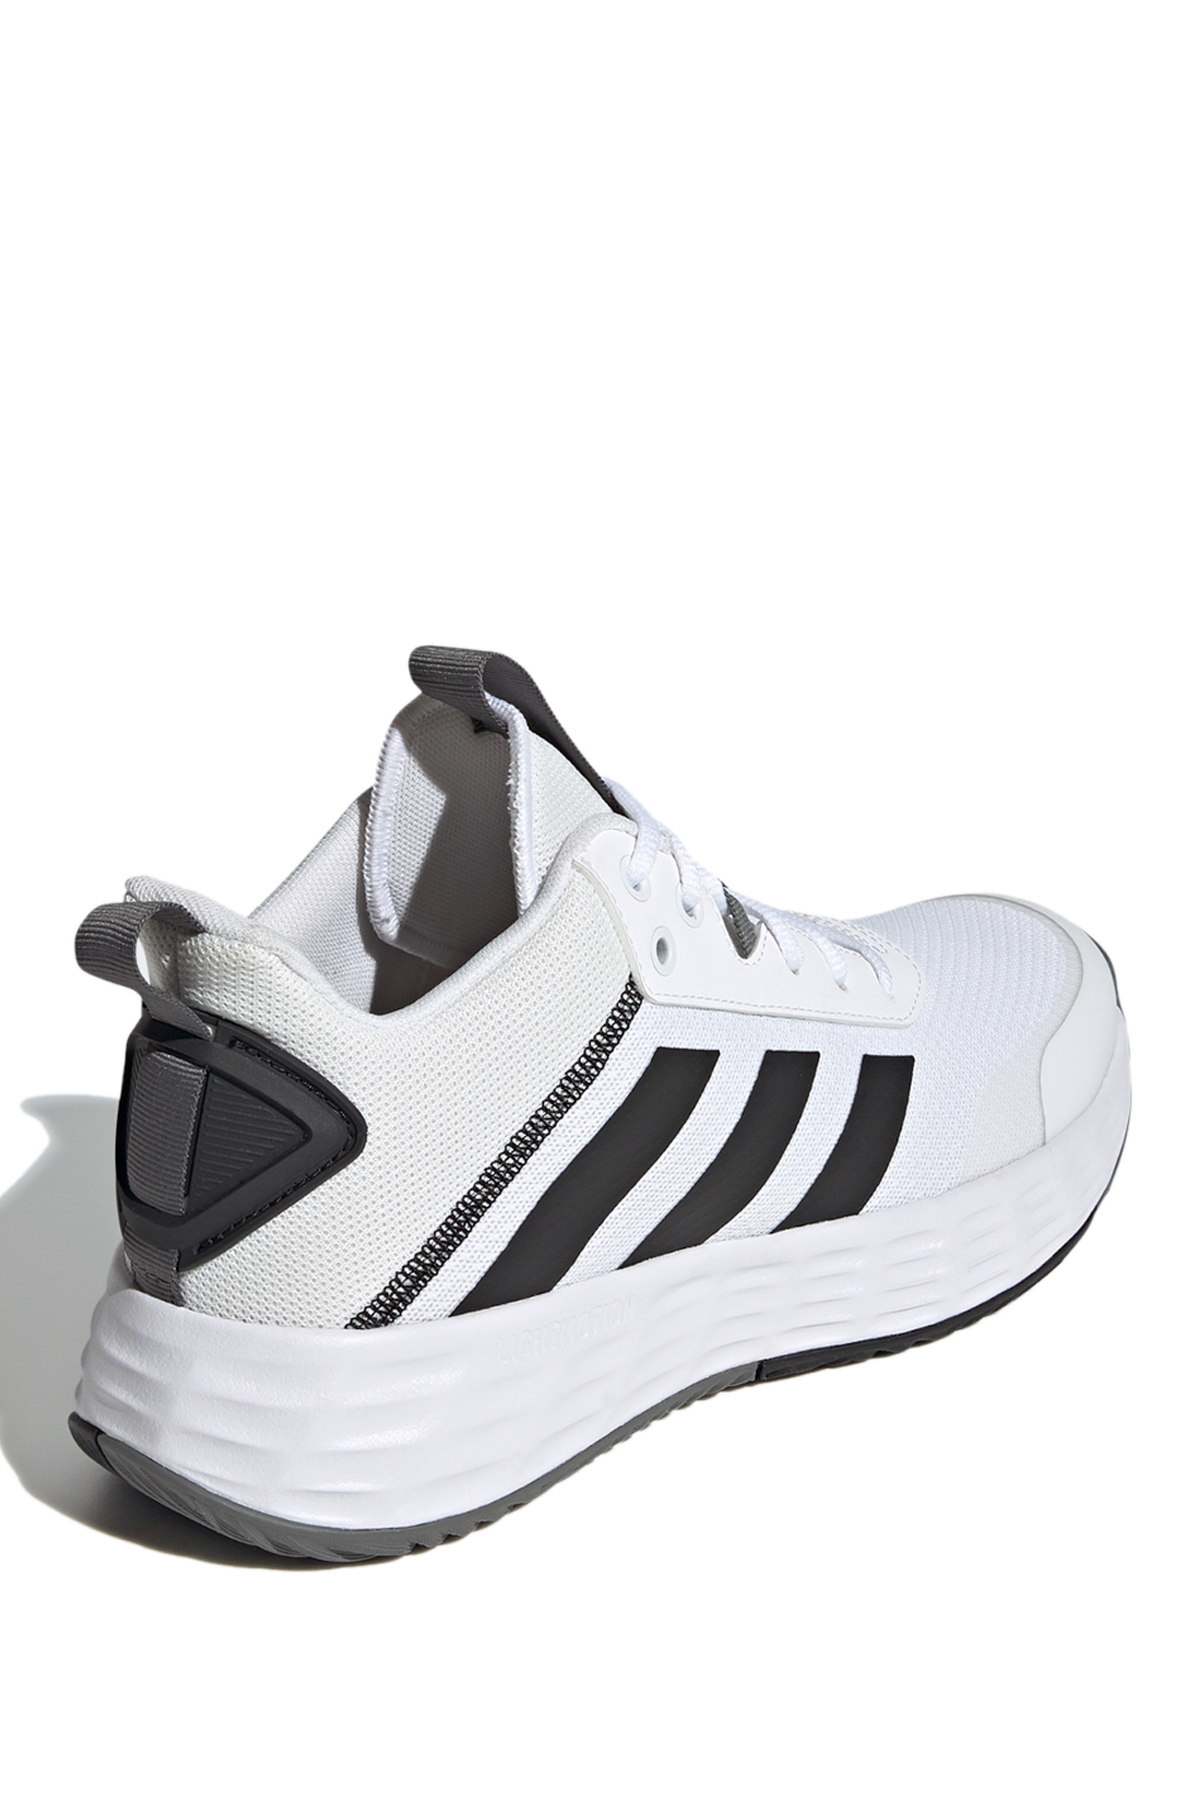 Ownthegame 2.0. Adidas Ownthegame 2.0. Кроссовки adidas Ownthegame 2.0. Кроссовки Ownthegame 2.0 adidas Ozone. Adidas Ownthegame 2.0 баскетбольная обувь белые.